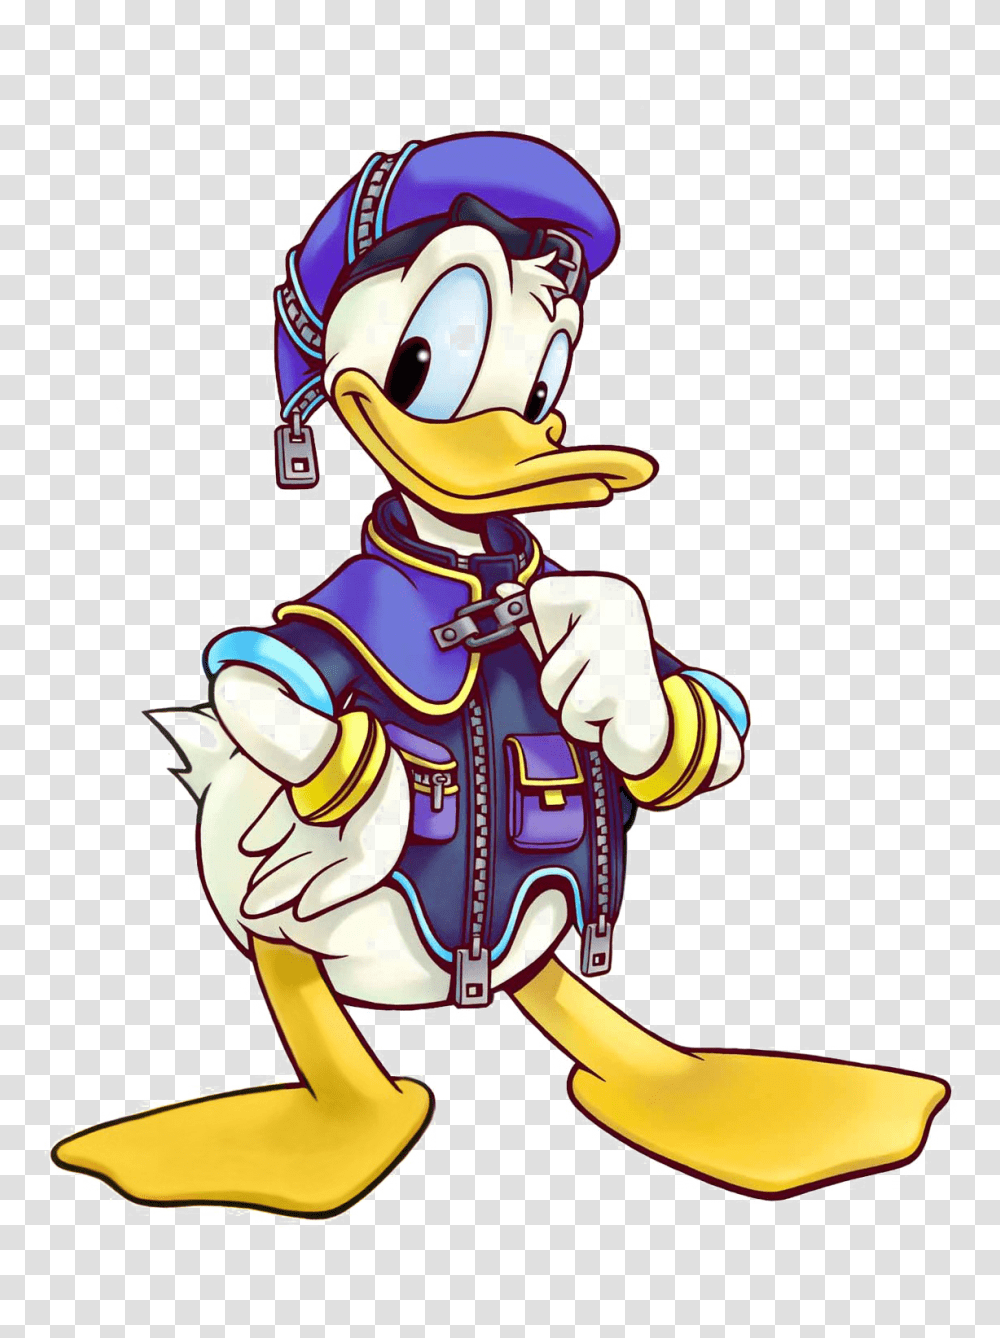 Donald Duck Image Kingdom Hearts 2 Donald, Helmet, Person, Costume, Performer Transparent Png